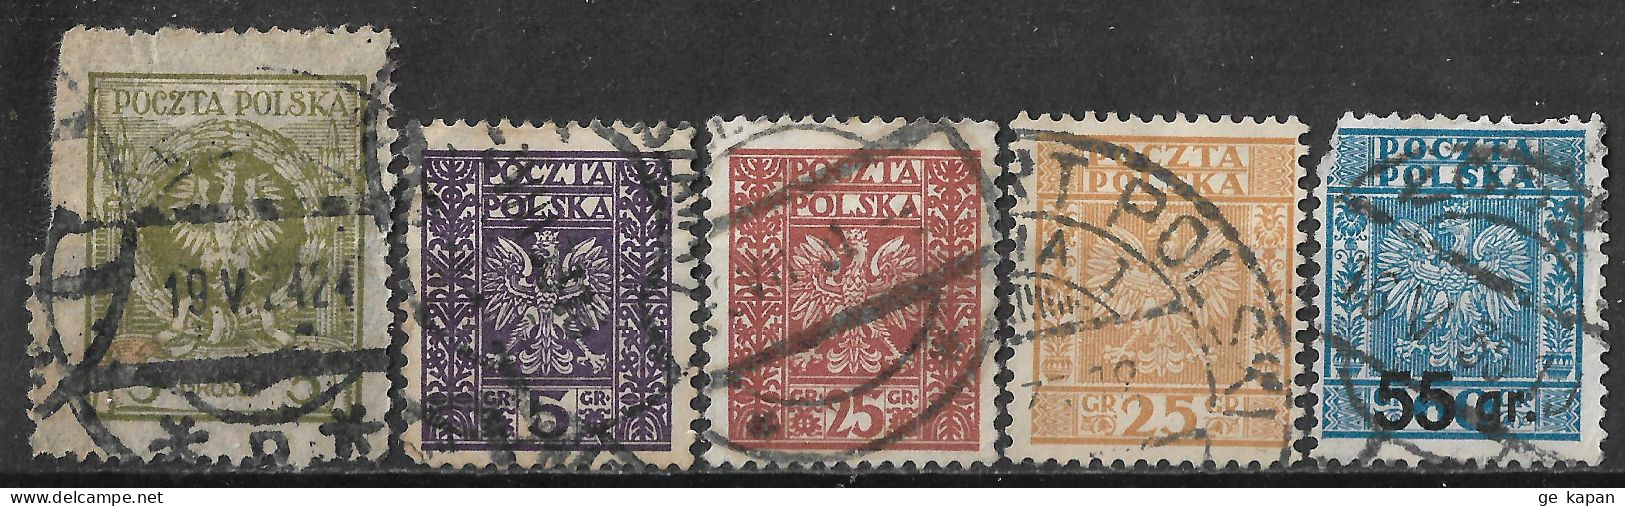 1924-1934 POLAND Set Of 5 Used Stamps (Michel # 204,261,263,276,292) CV €2.60 - Oblitérés